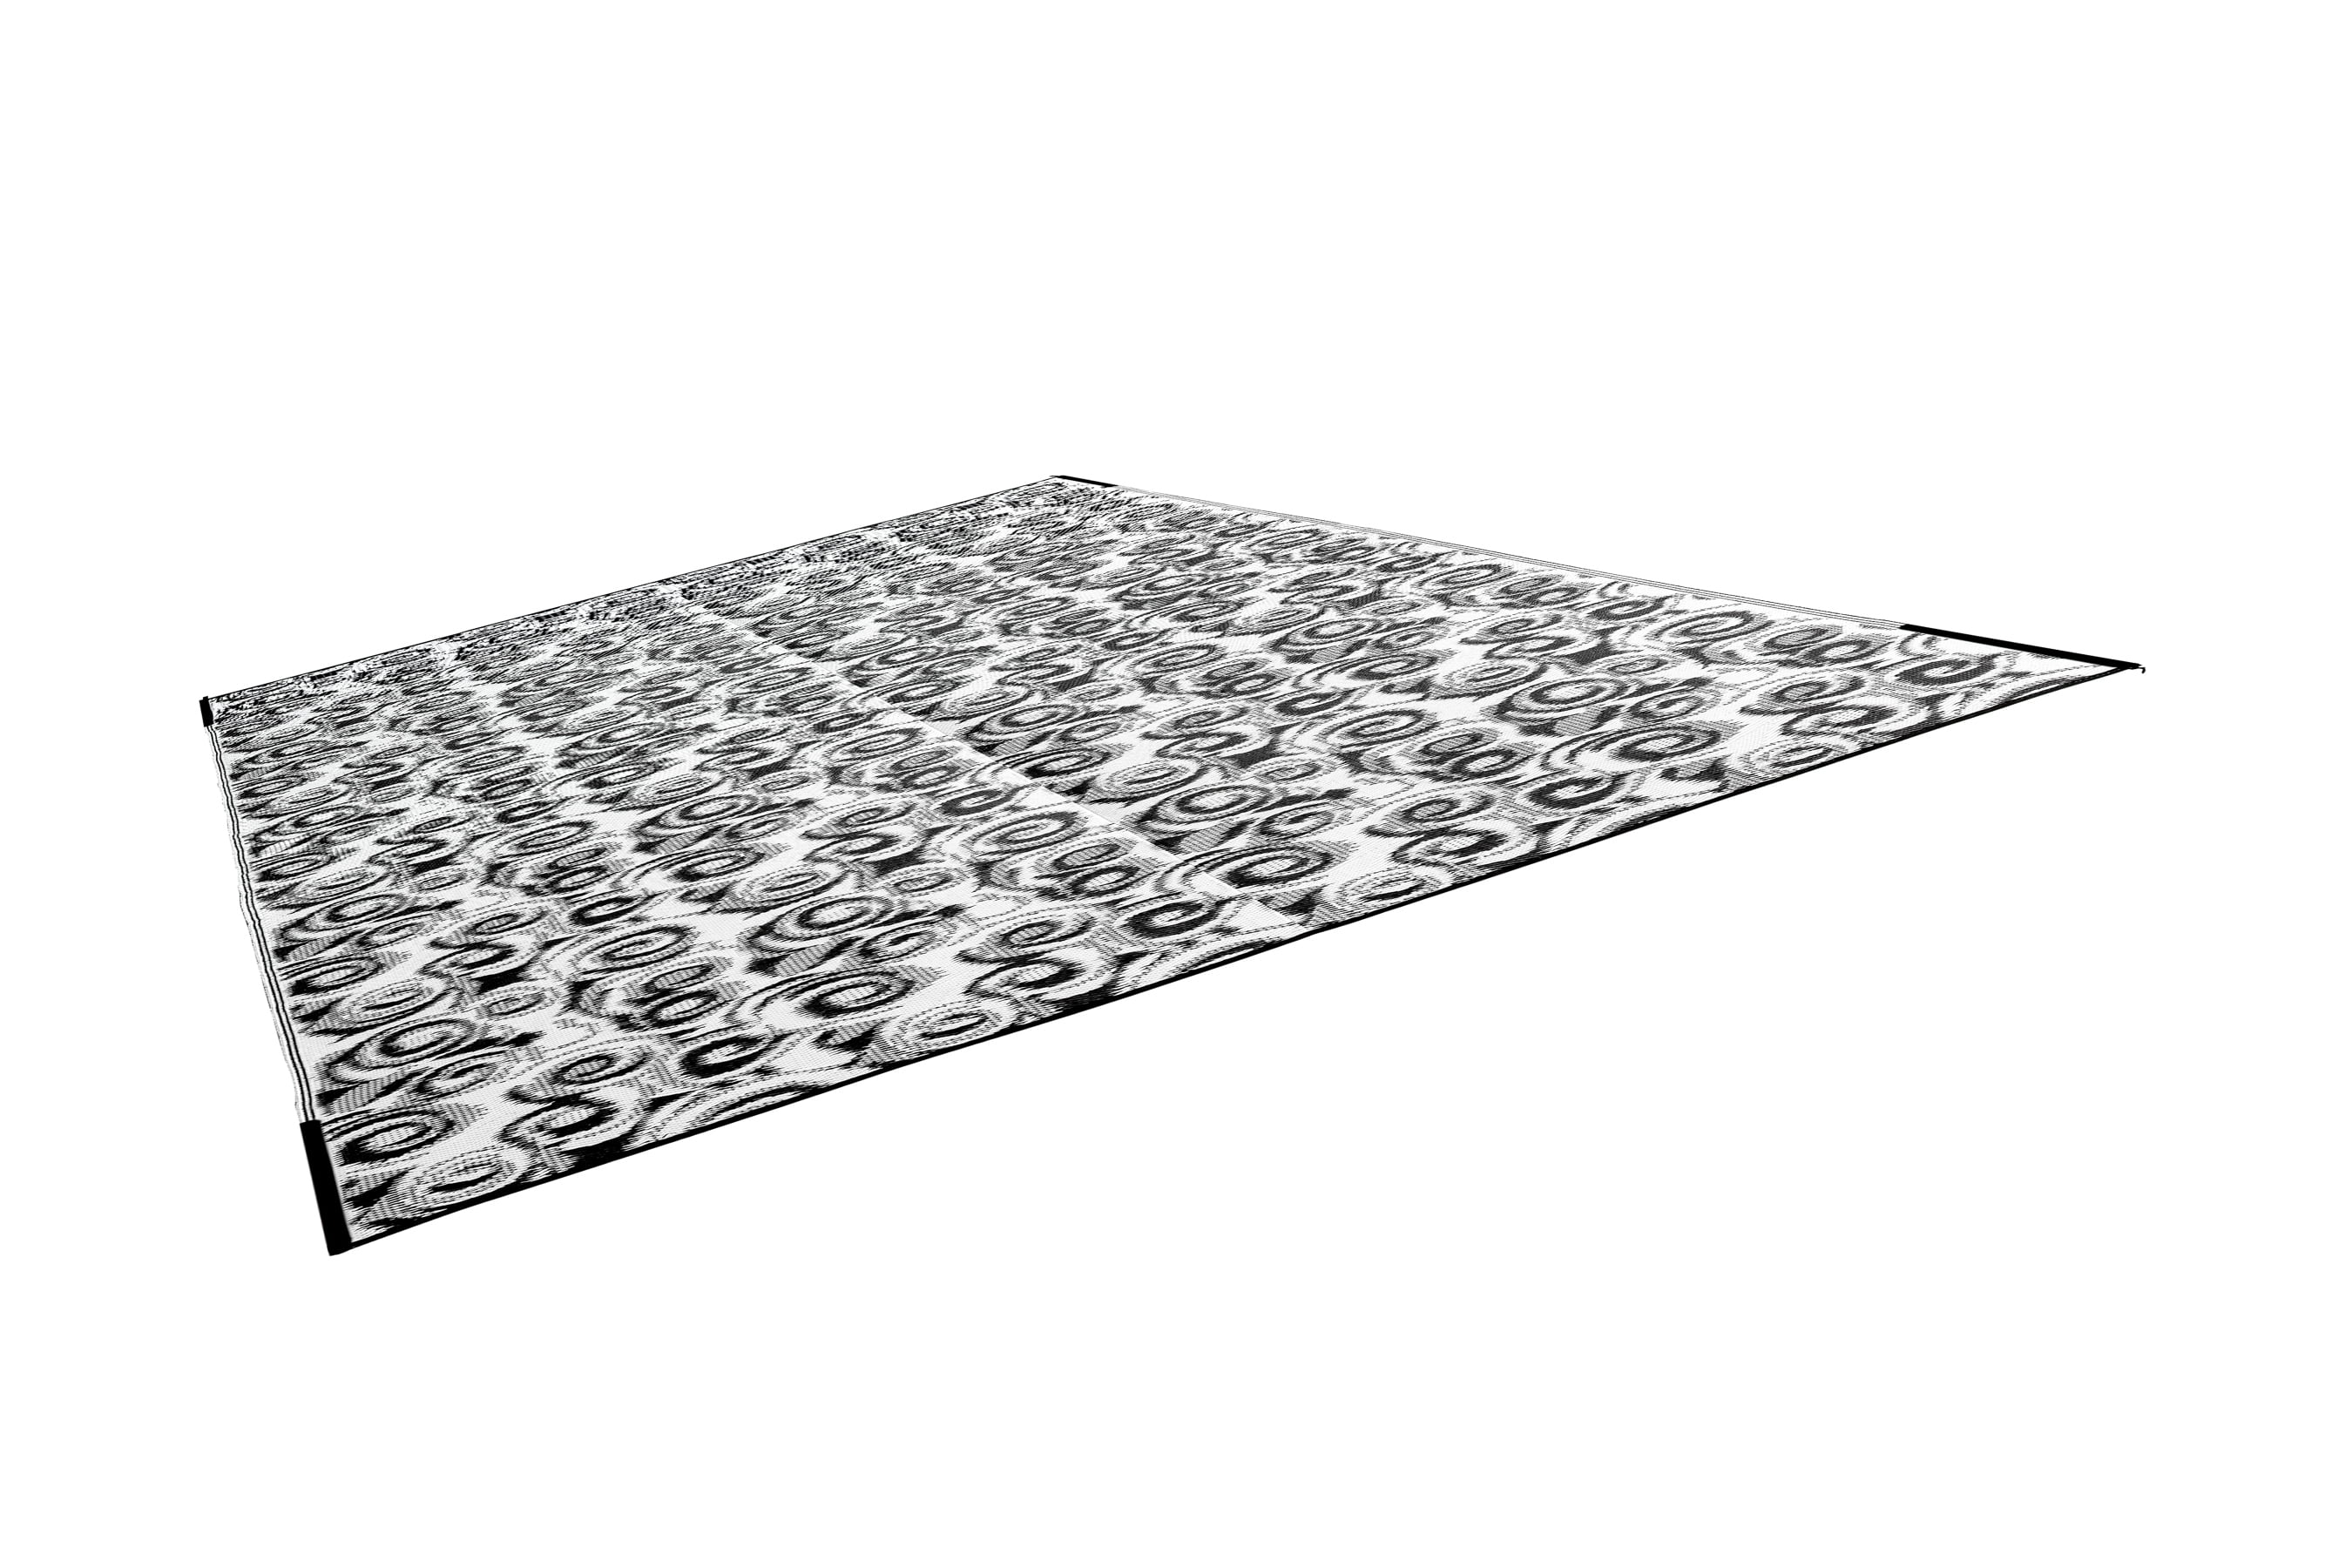 Reversible RV Patio Mat with Aztec Border Design, 8' x 11', Black/Gray